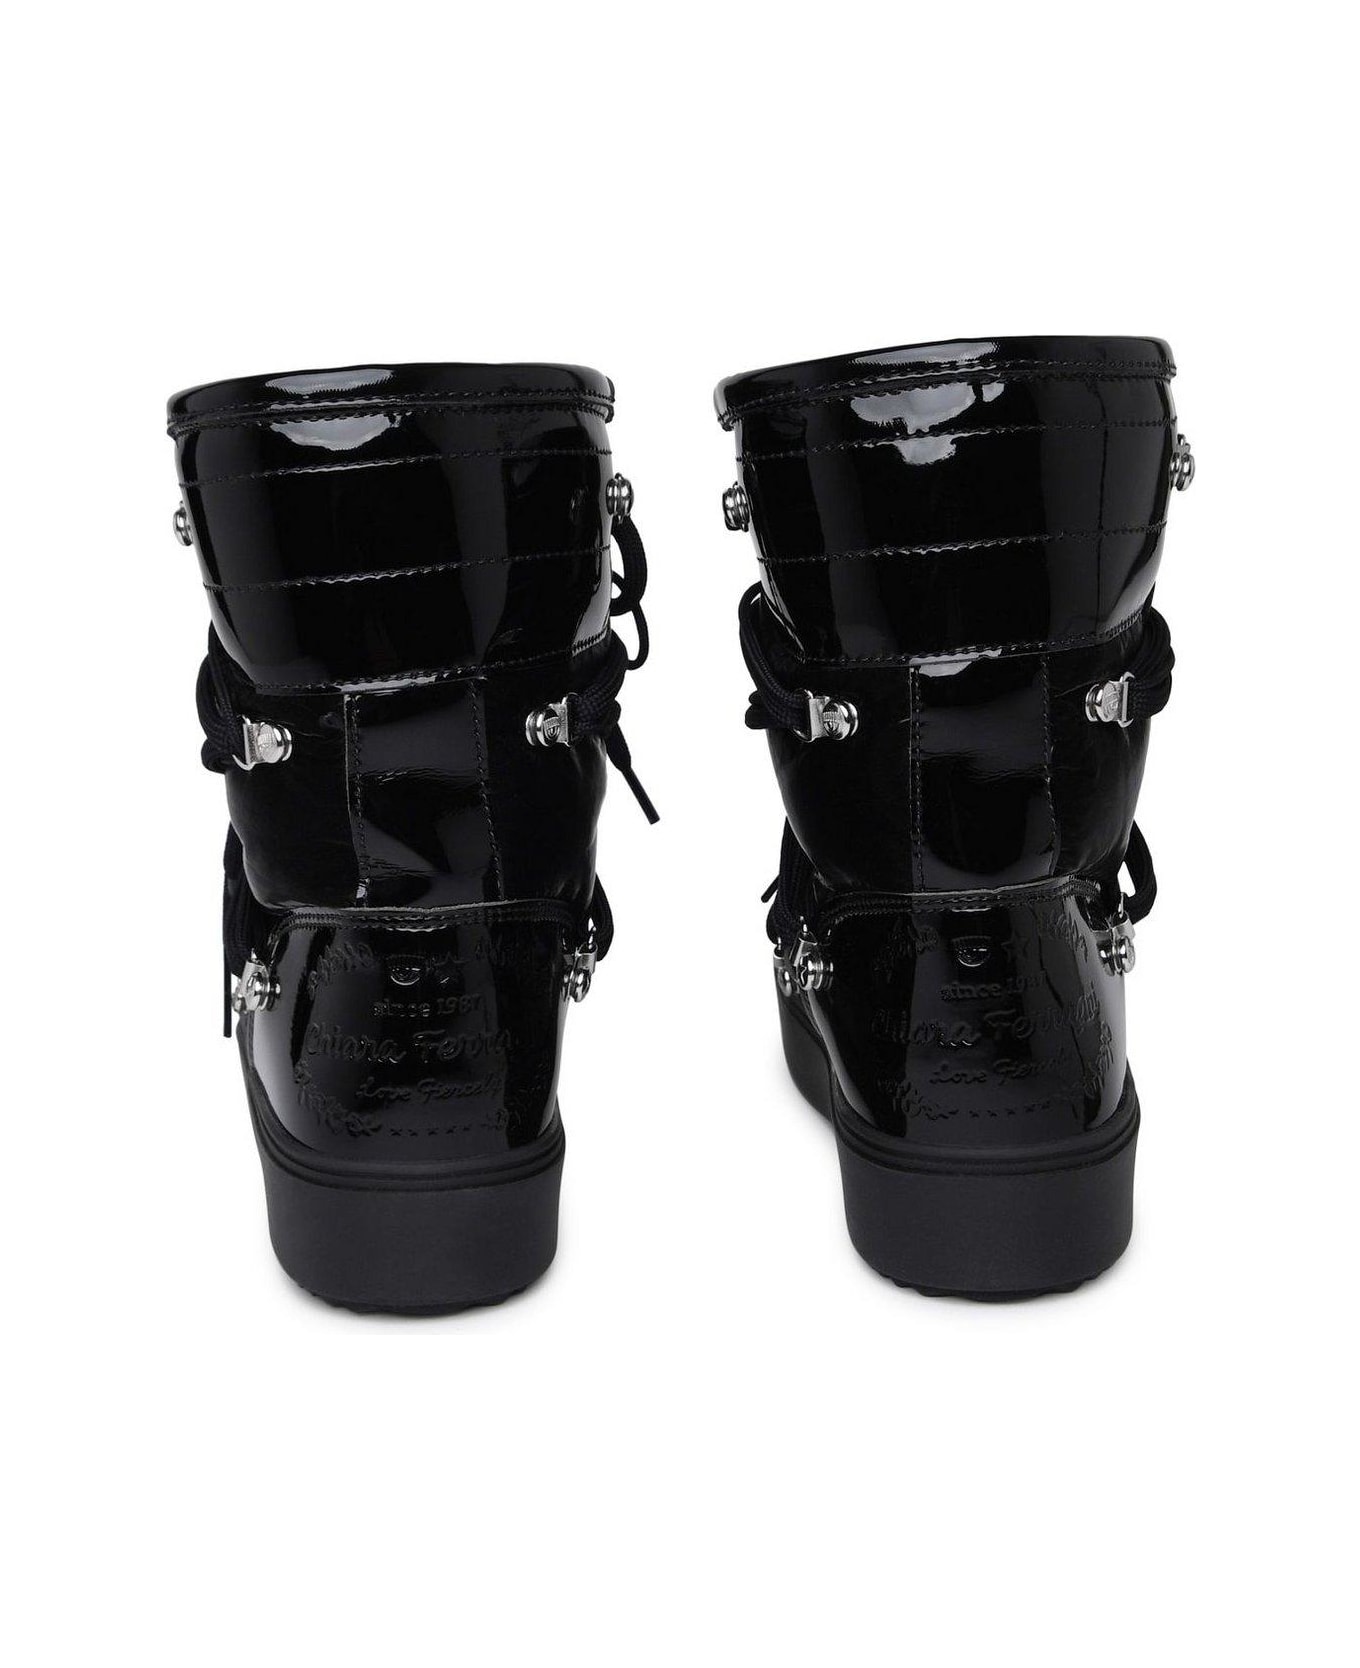 Chiara Ferragni Cf Snow Boots Chiara Ferragni - BLACK ブーツ